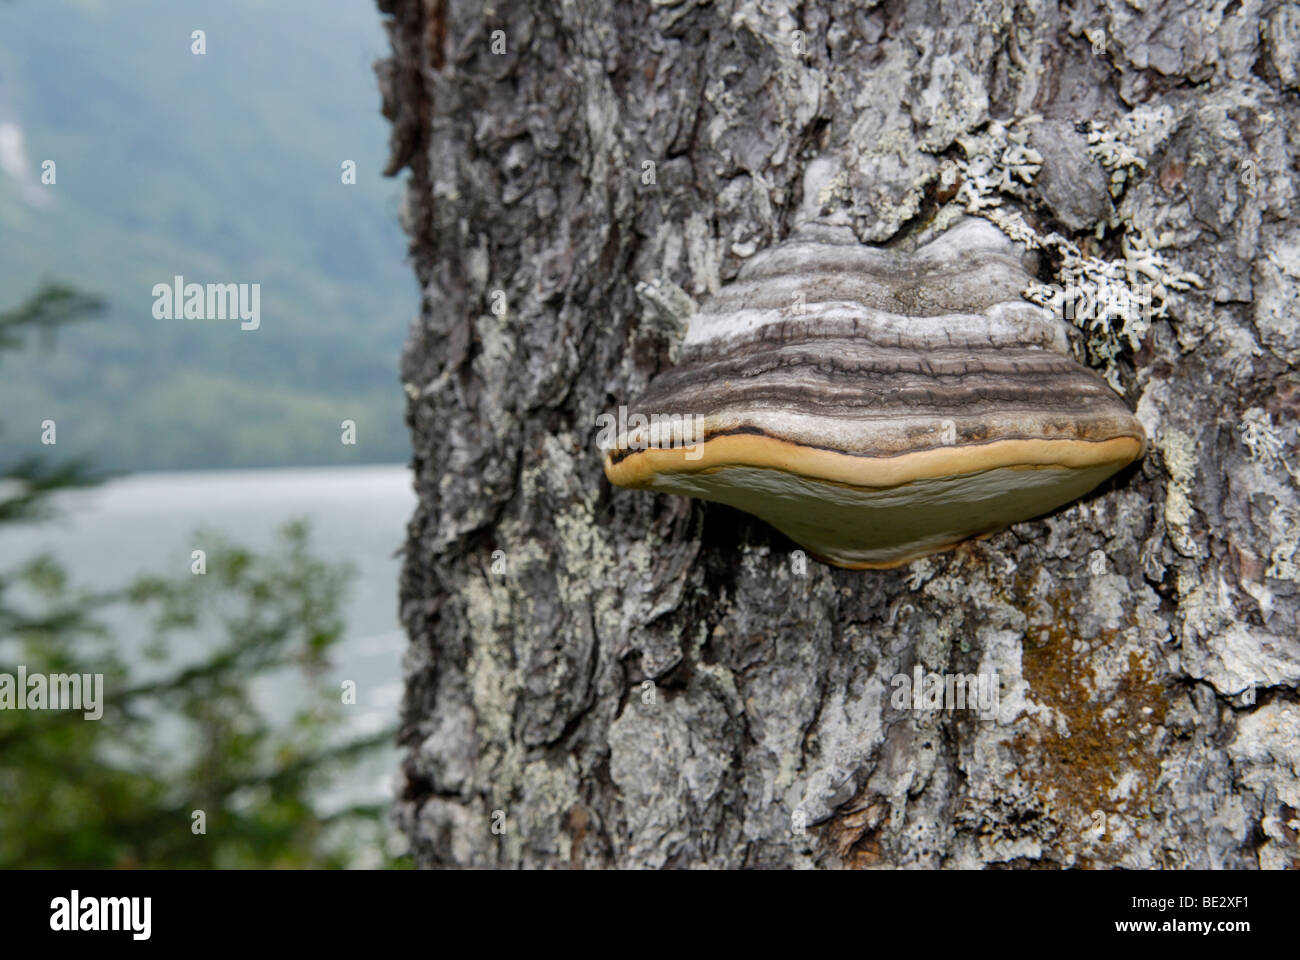 Shelf fungus, Ganoderma sp., feeding parasitically on a living tree. Stock Photo